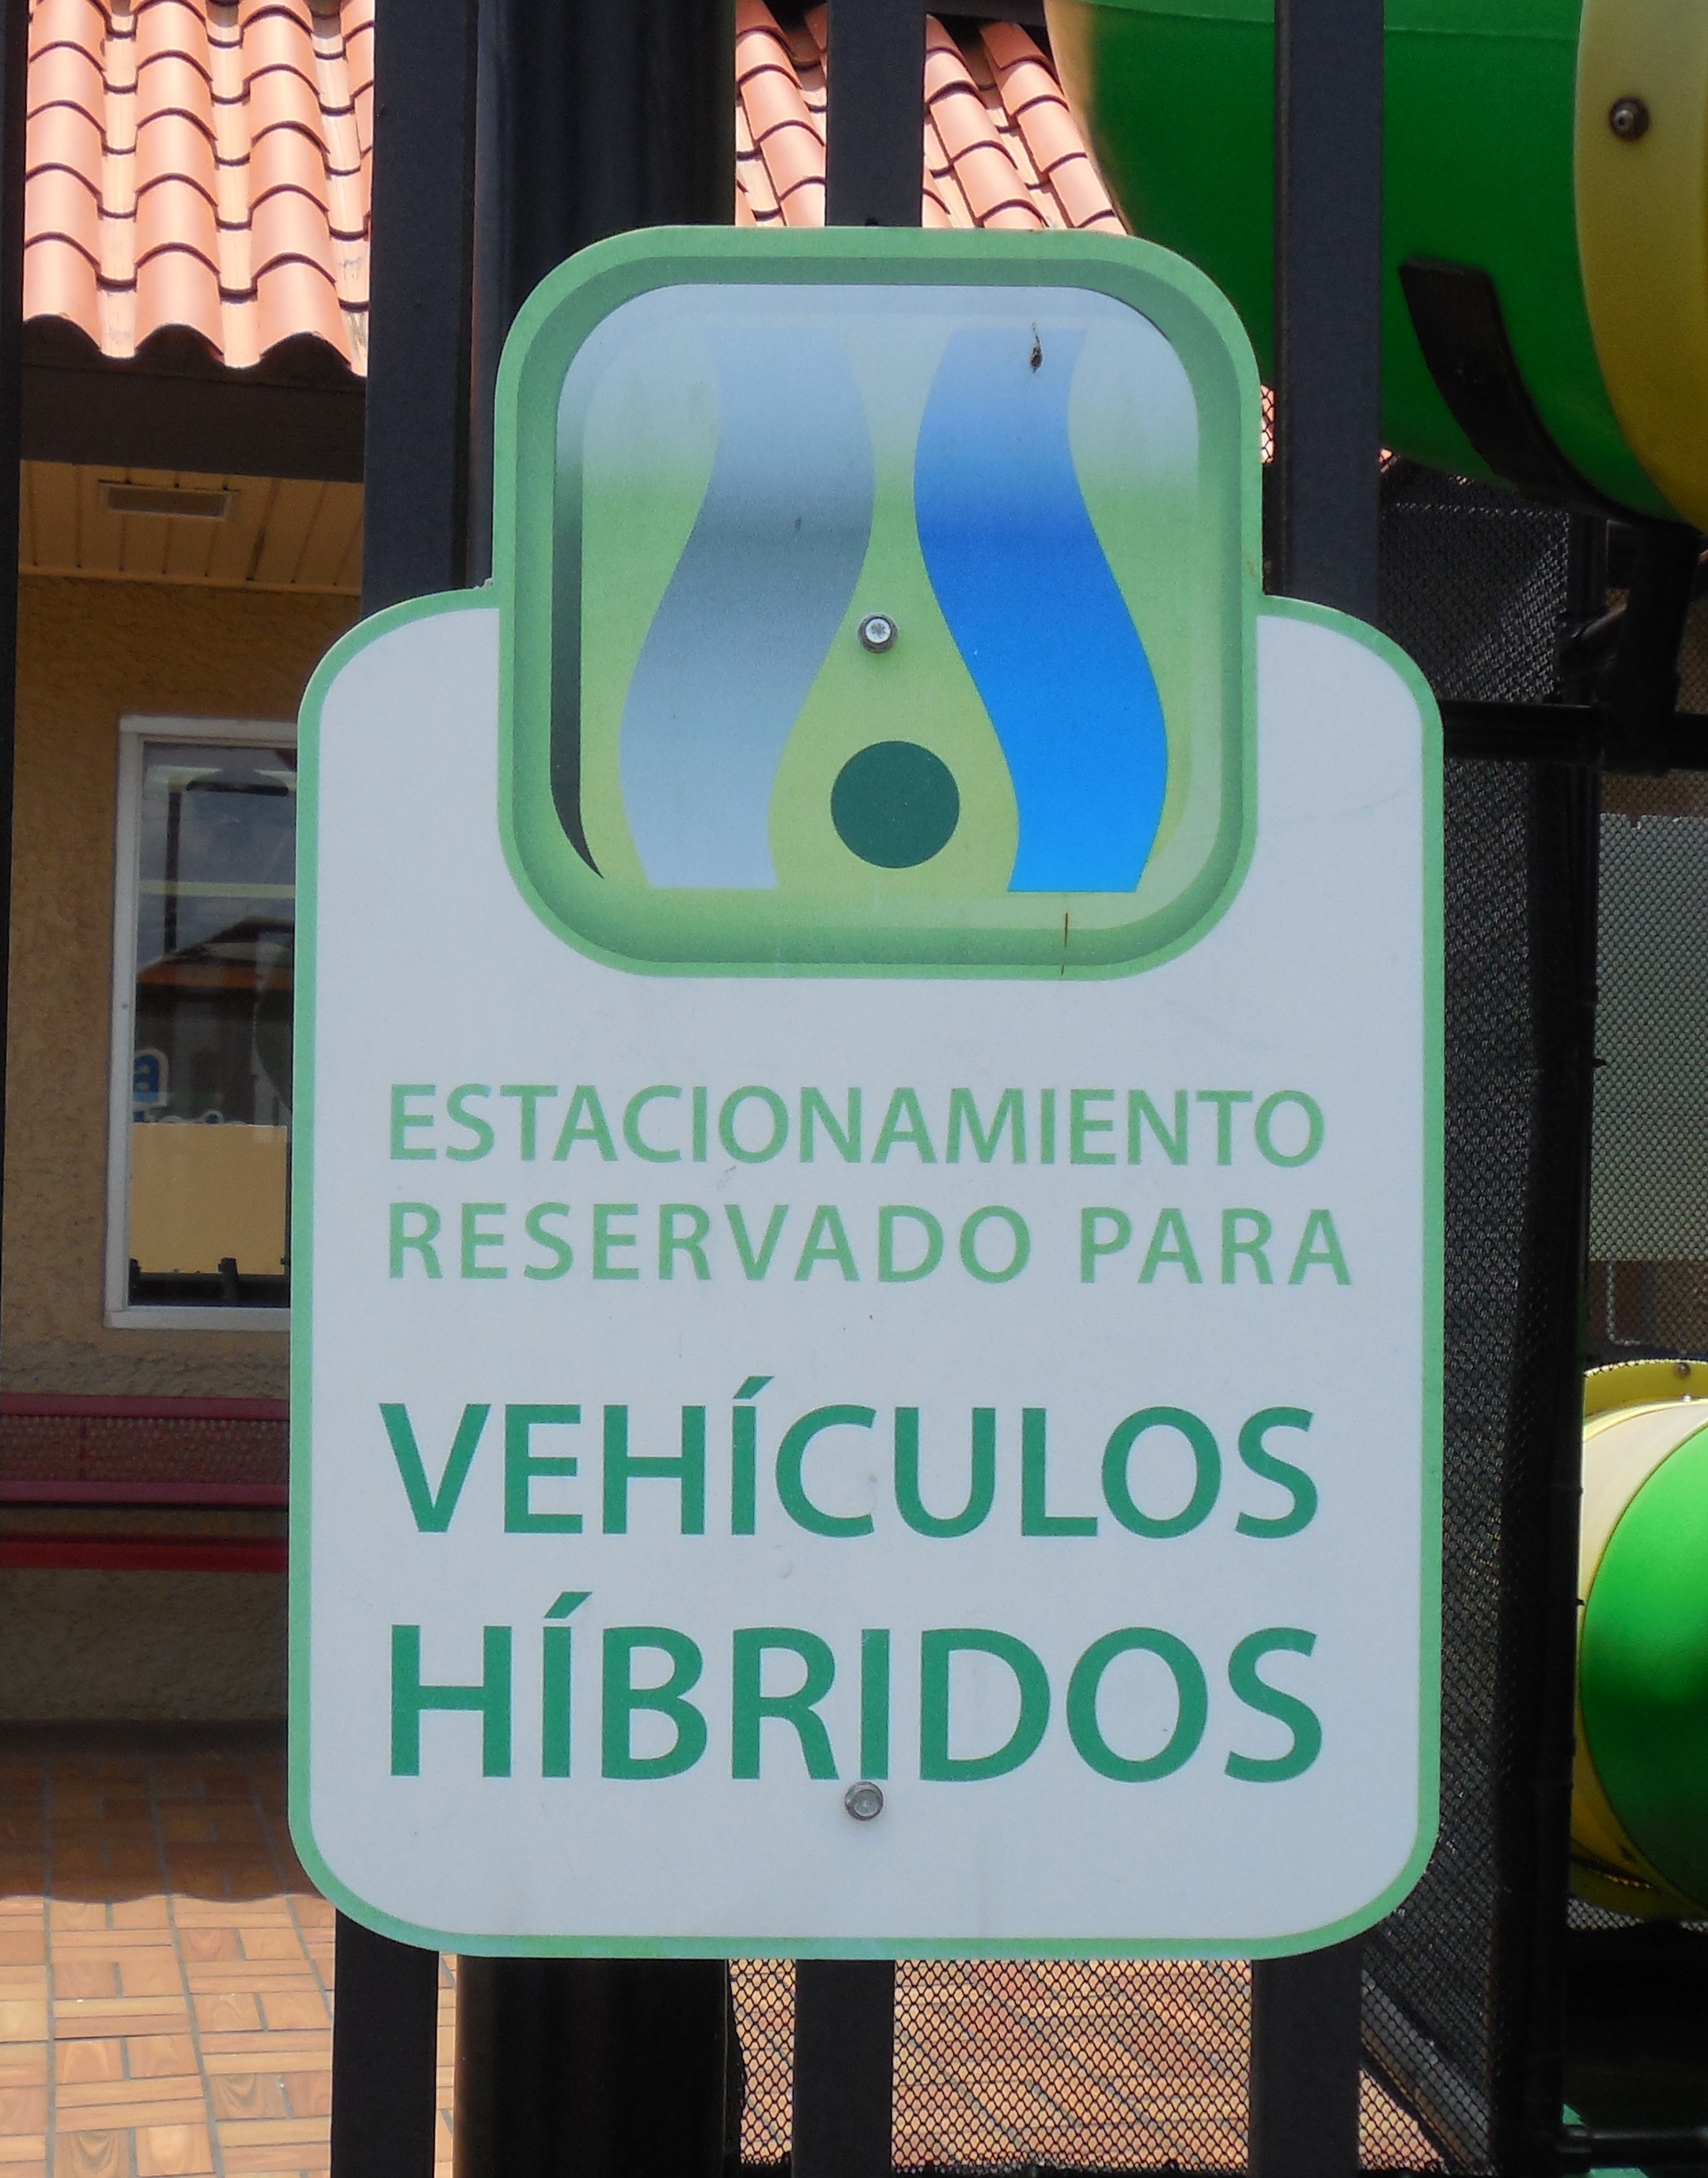 Puerto Rico has Hybrid Parking Signs